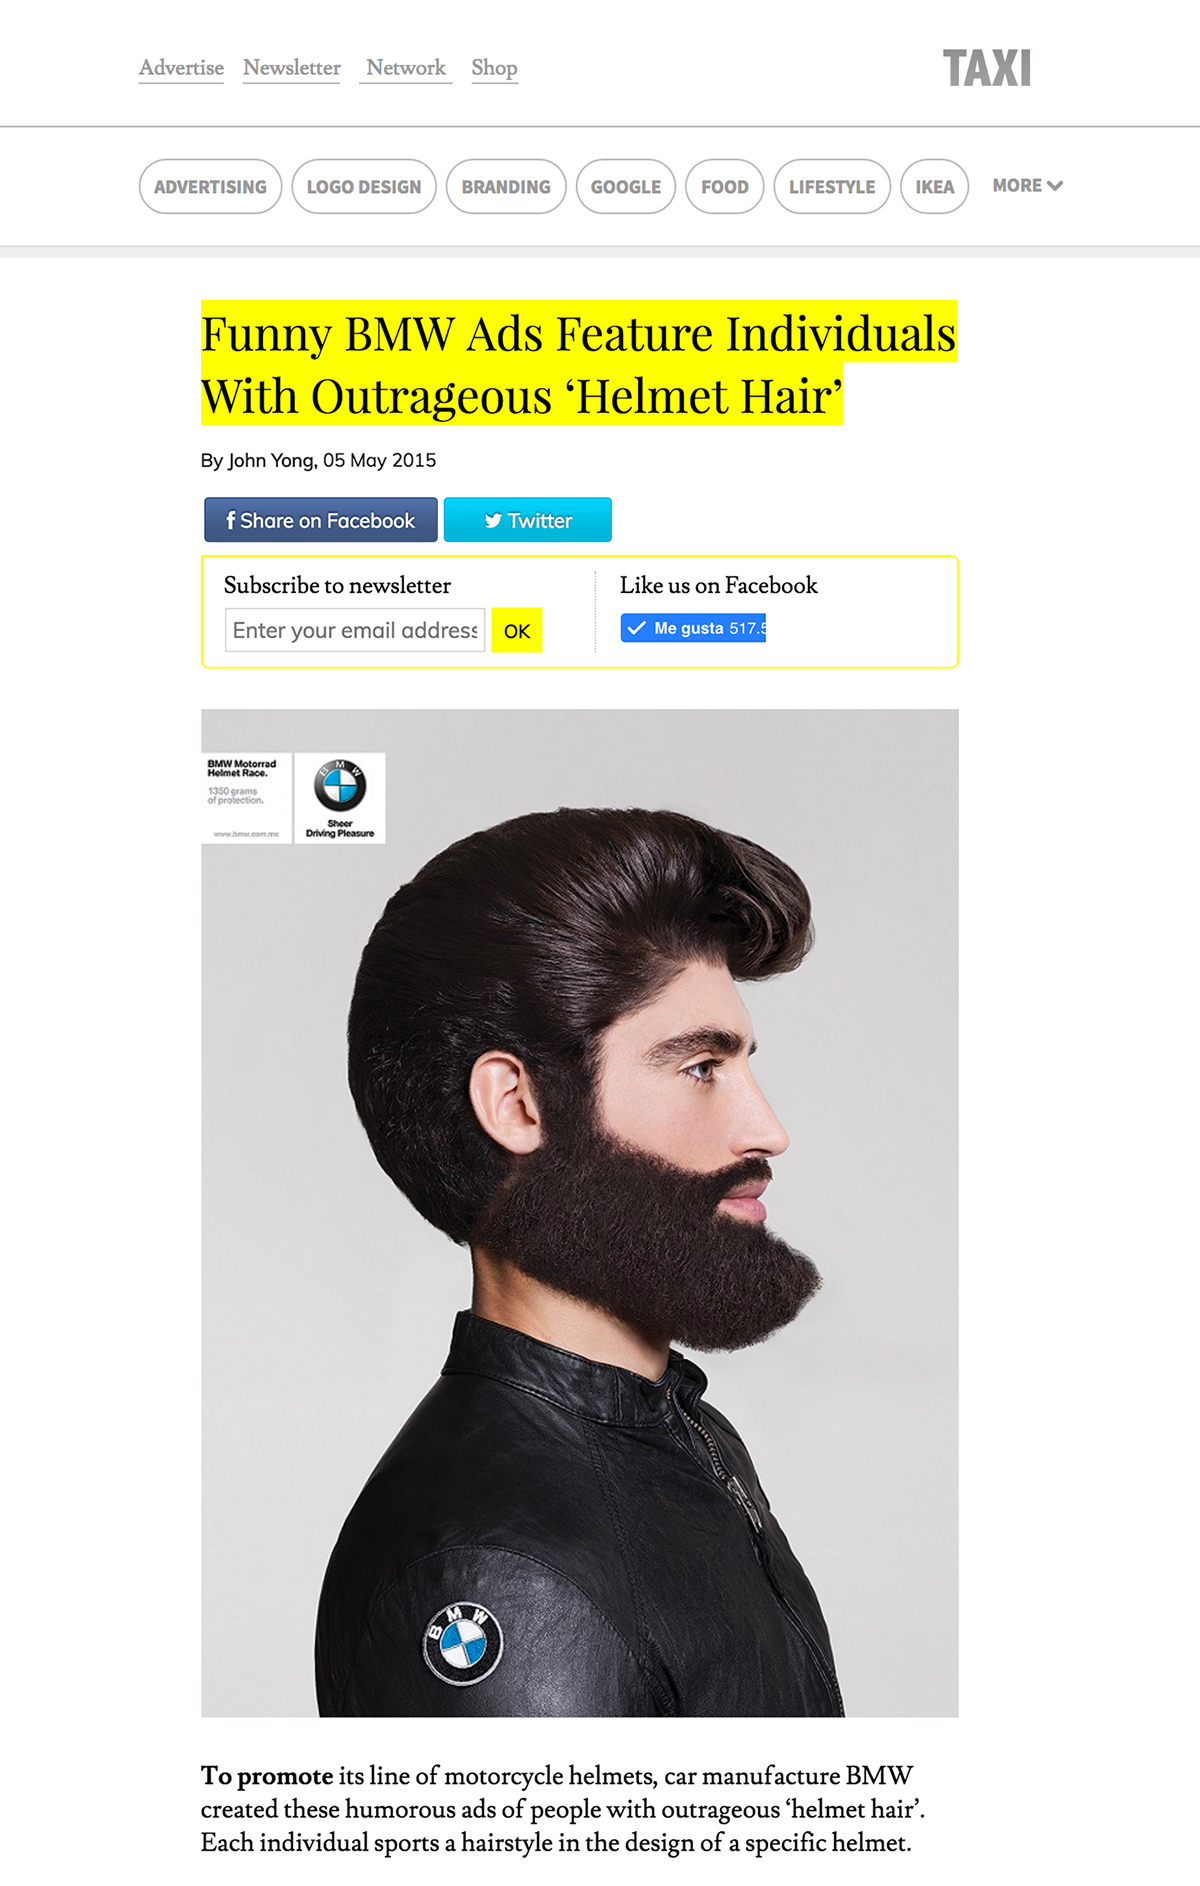 Helmet hair beard BMW motocycling photo print Cannes lions winner